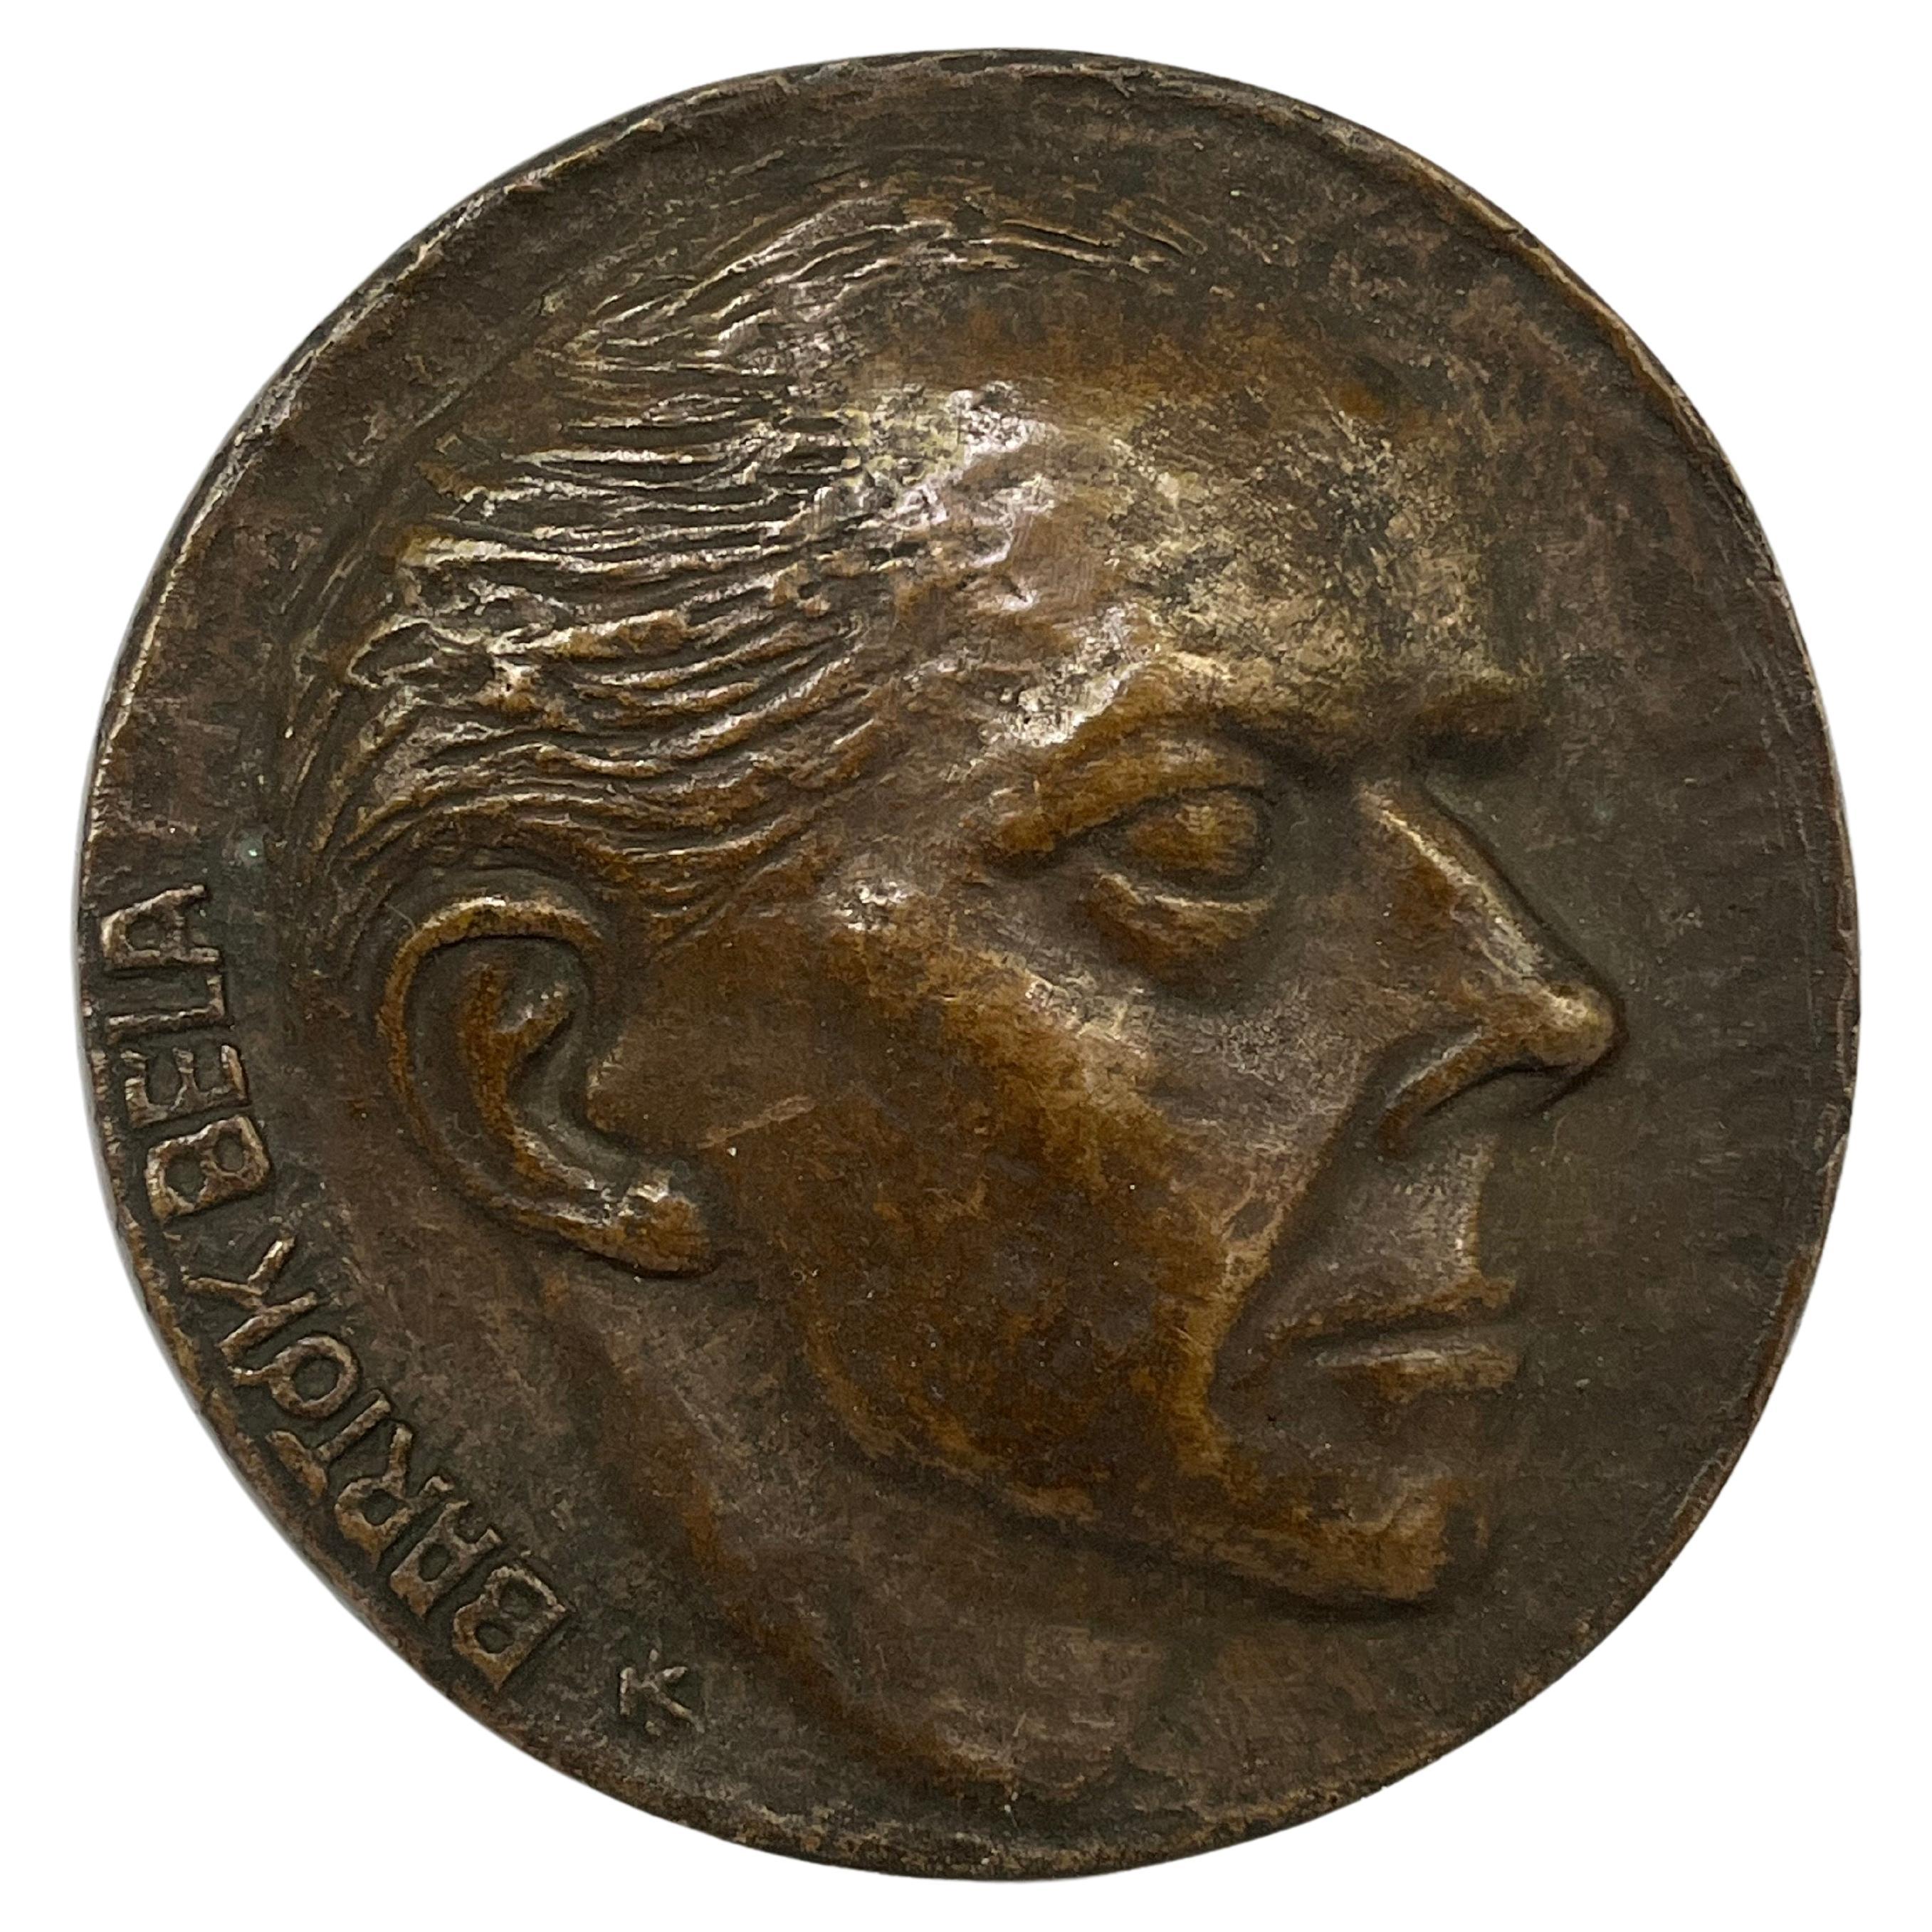 Bela Bartok Bronze Medal Sculpture Hungarian Music Composer Ethnomusicologist For Sale